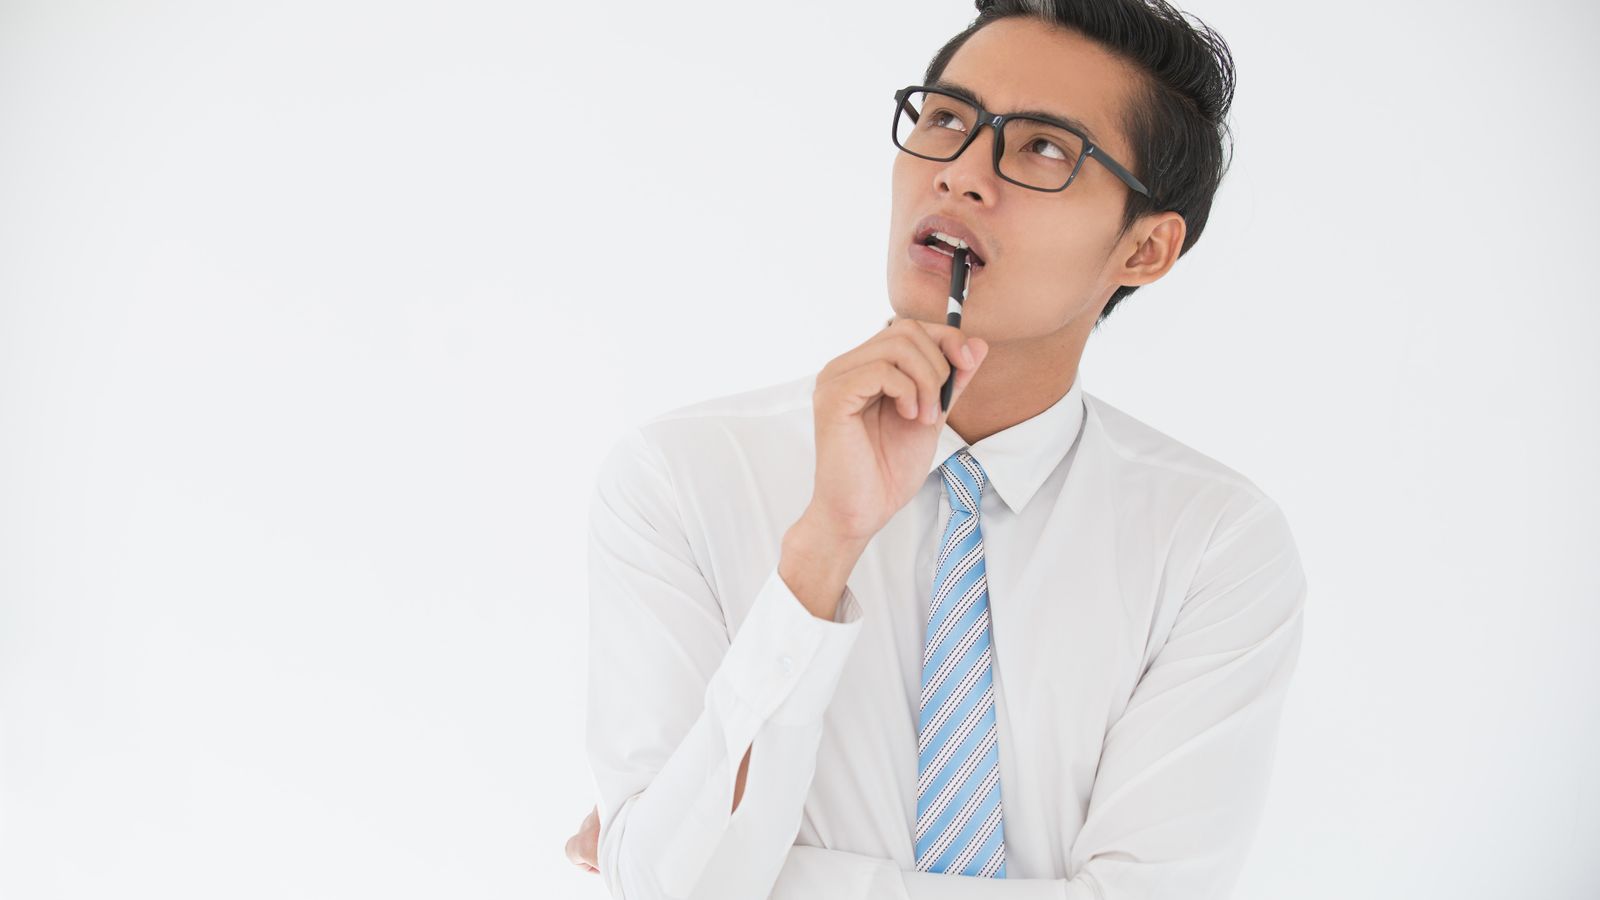 Pensive Asian Business Man Biting Pen Min